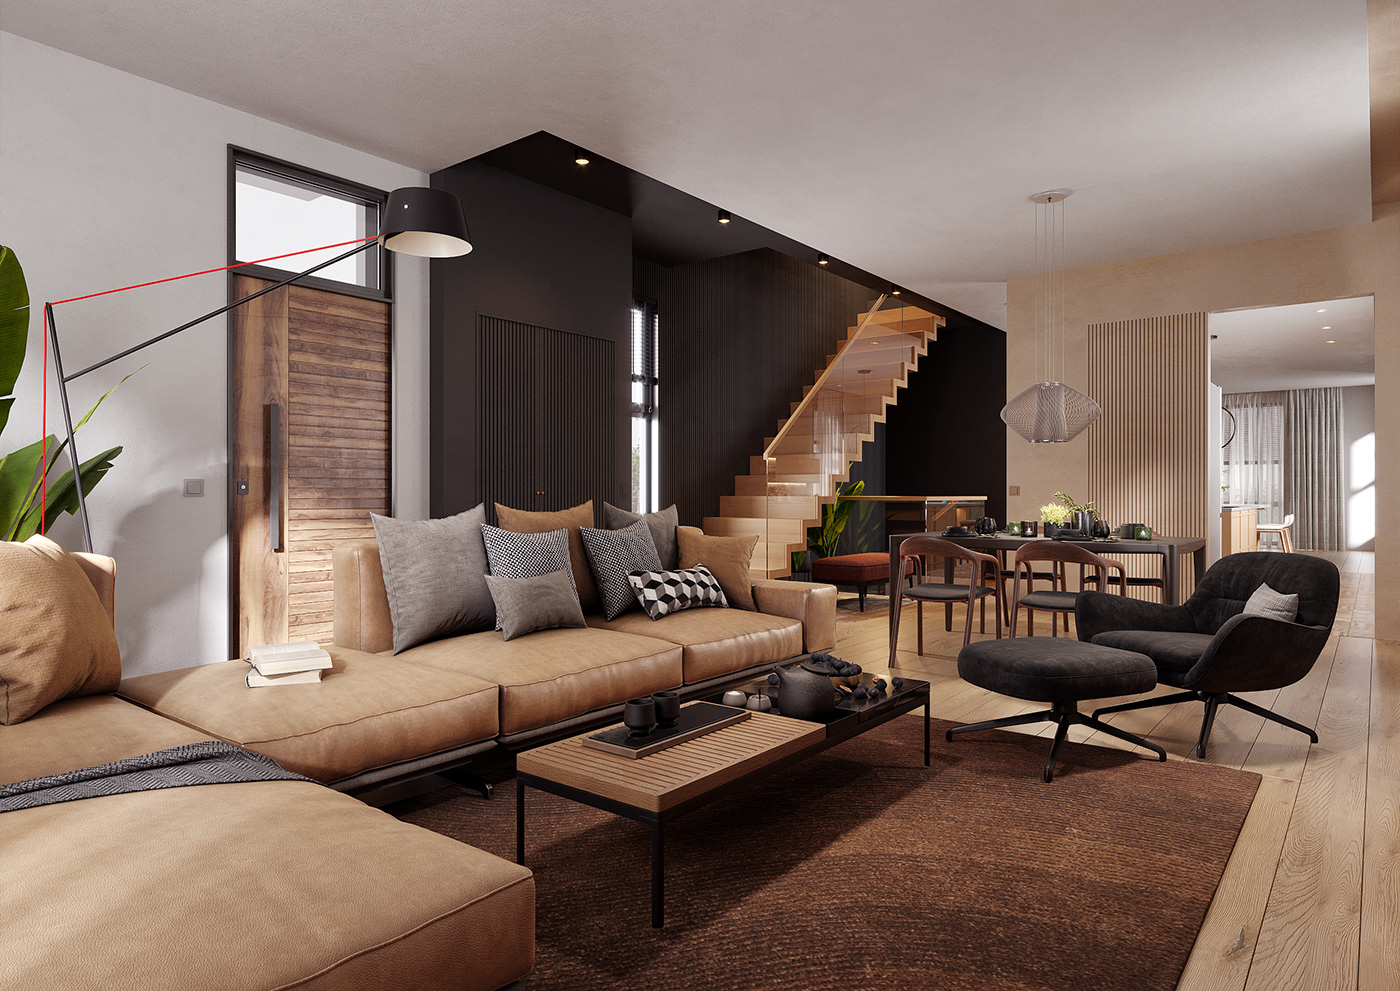 Conceptual interior design A (for LK&PROJEKT) on Behance